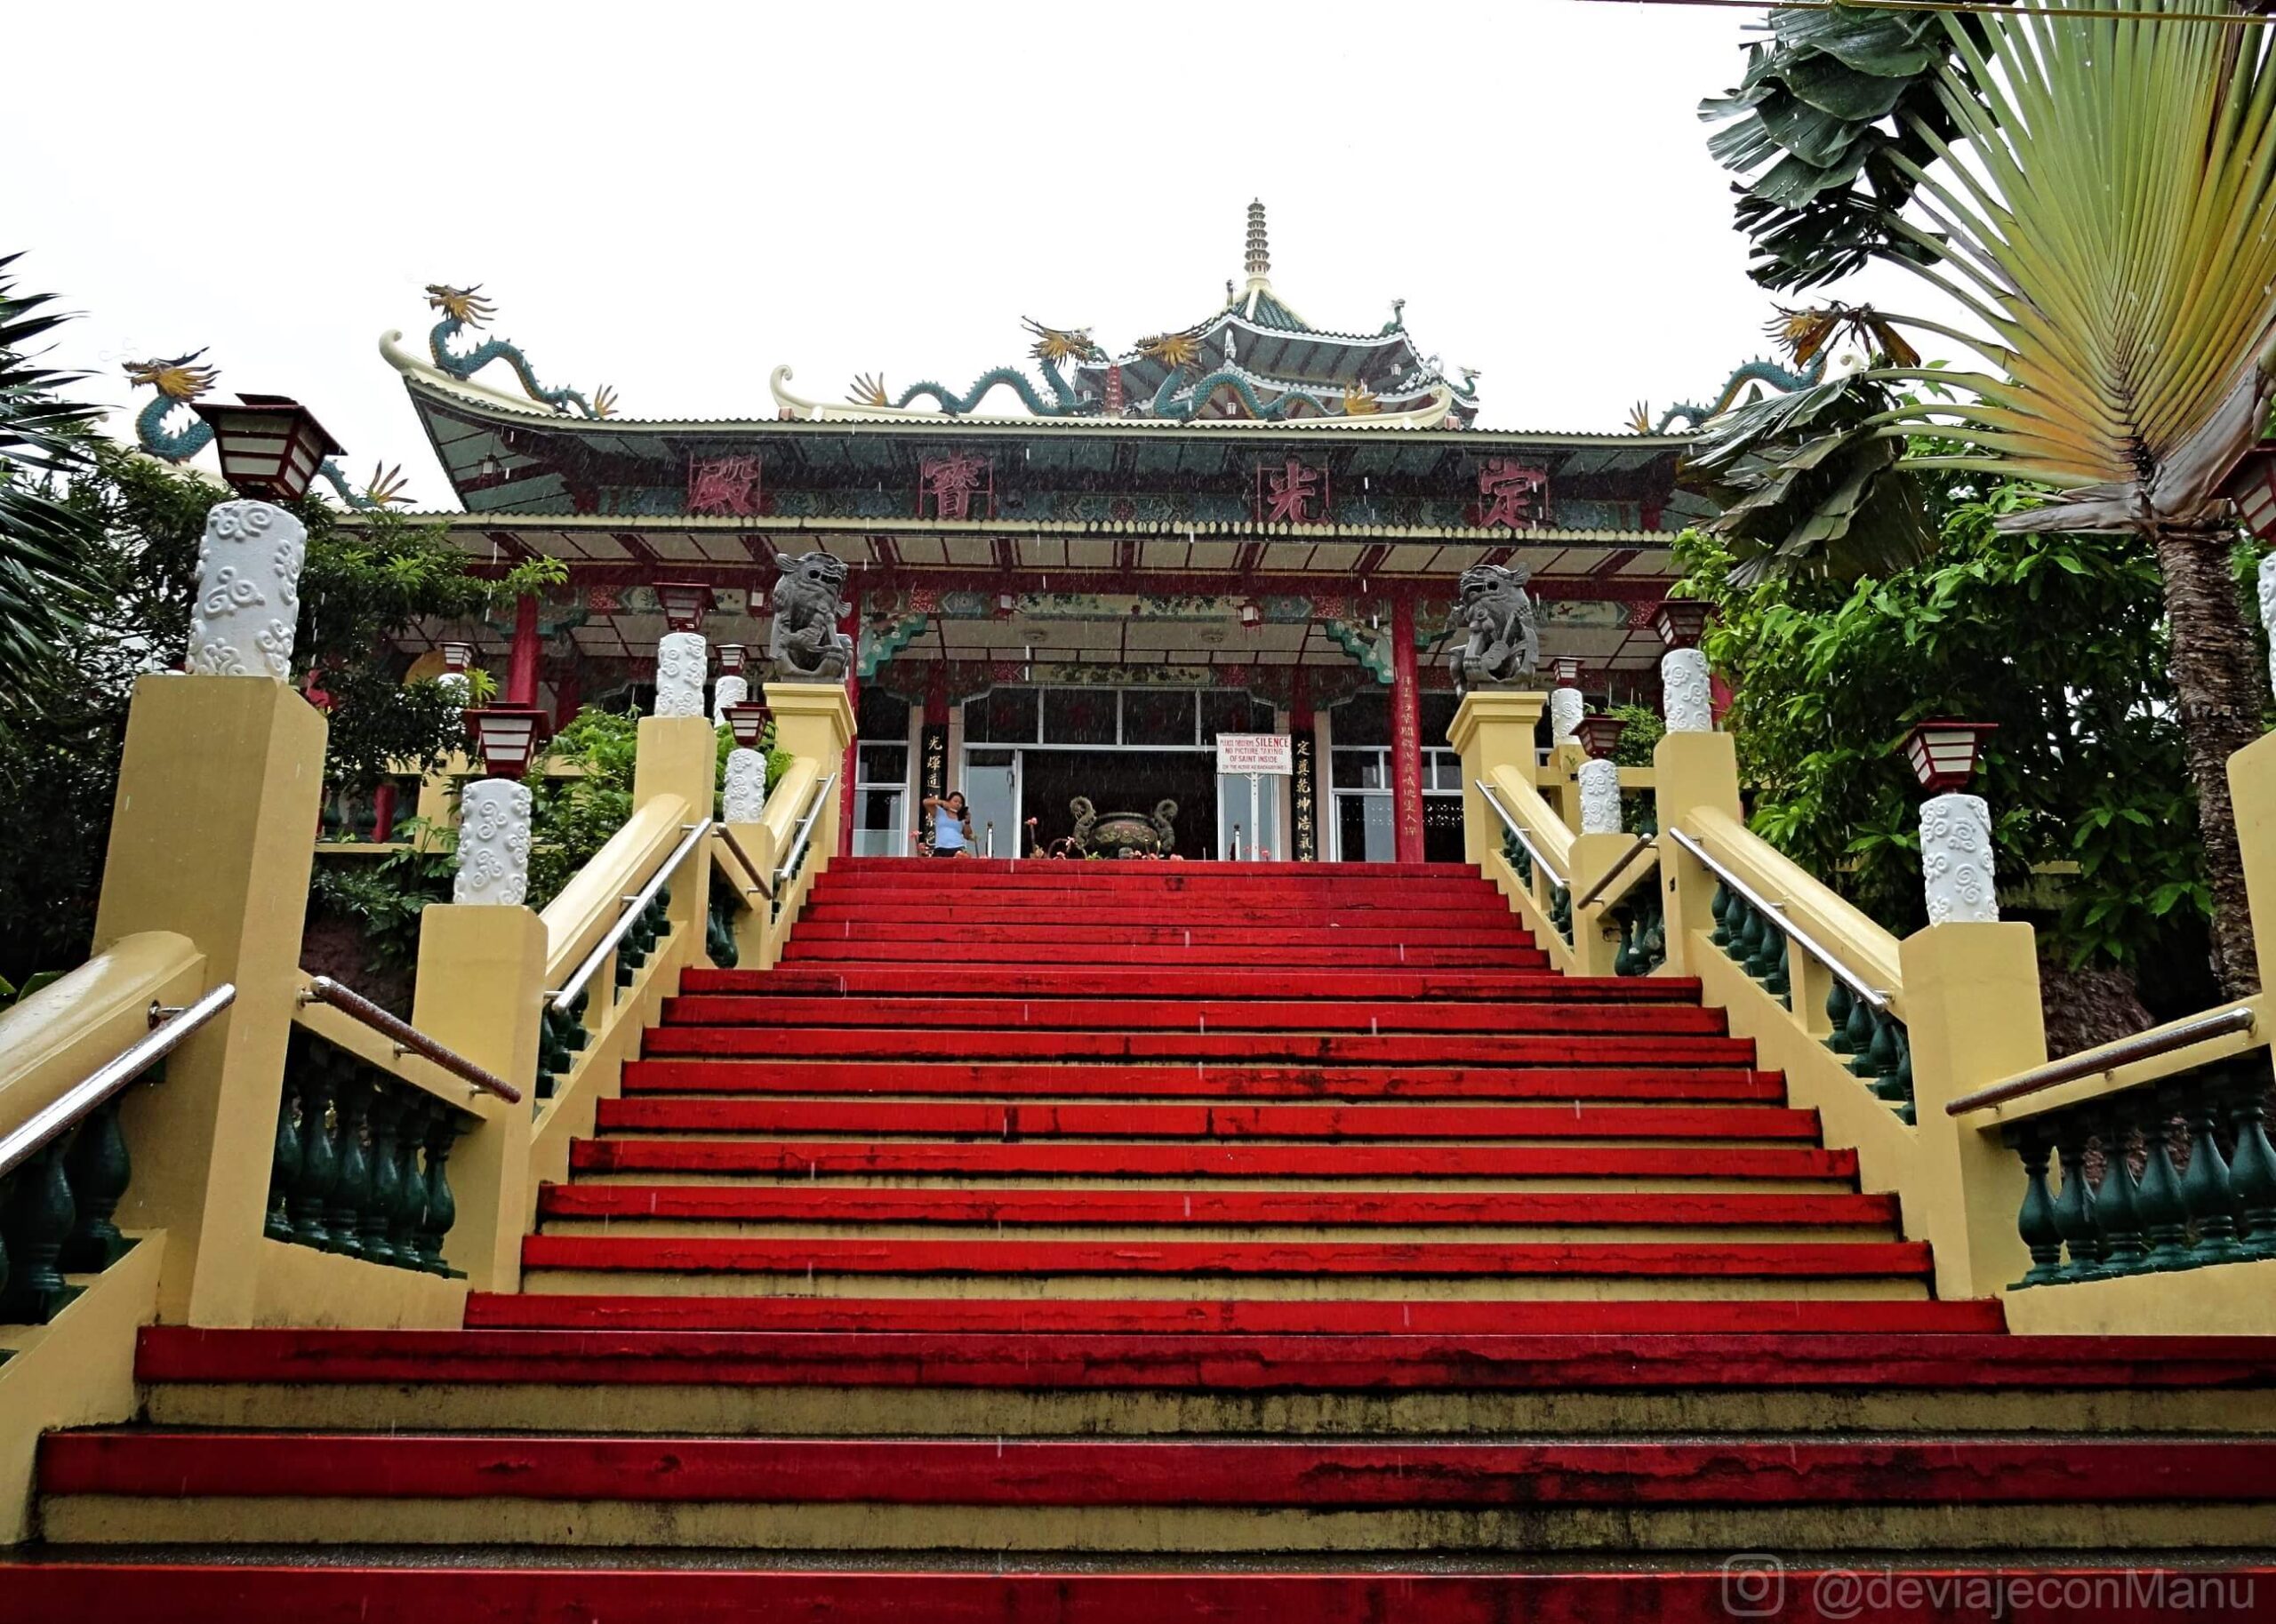 Escaleras Tao